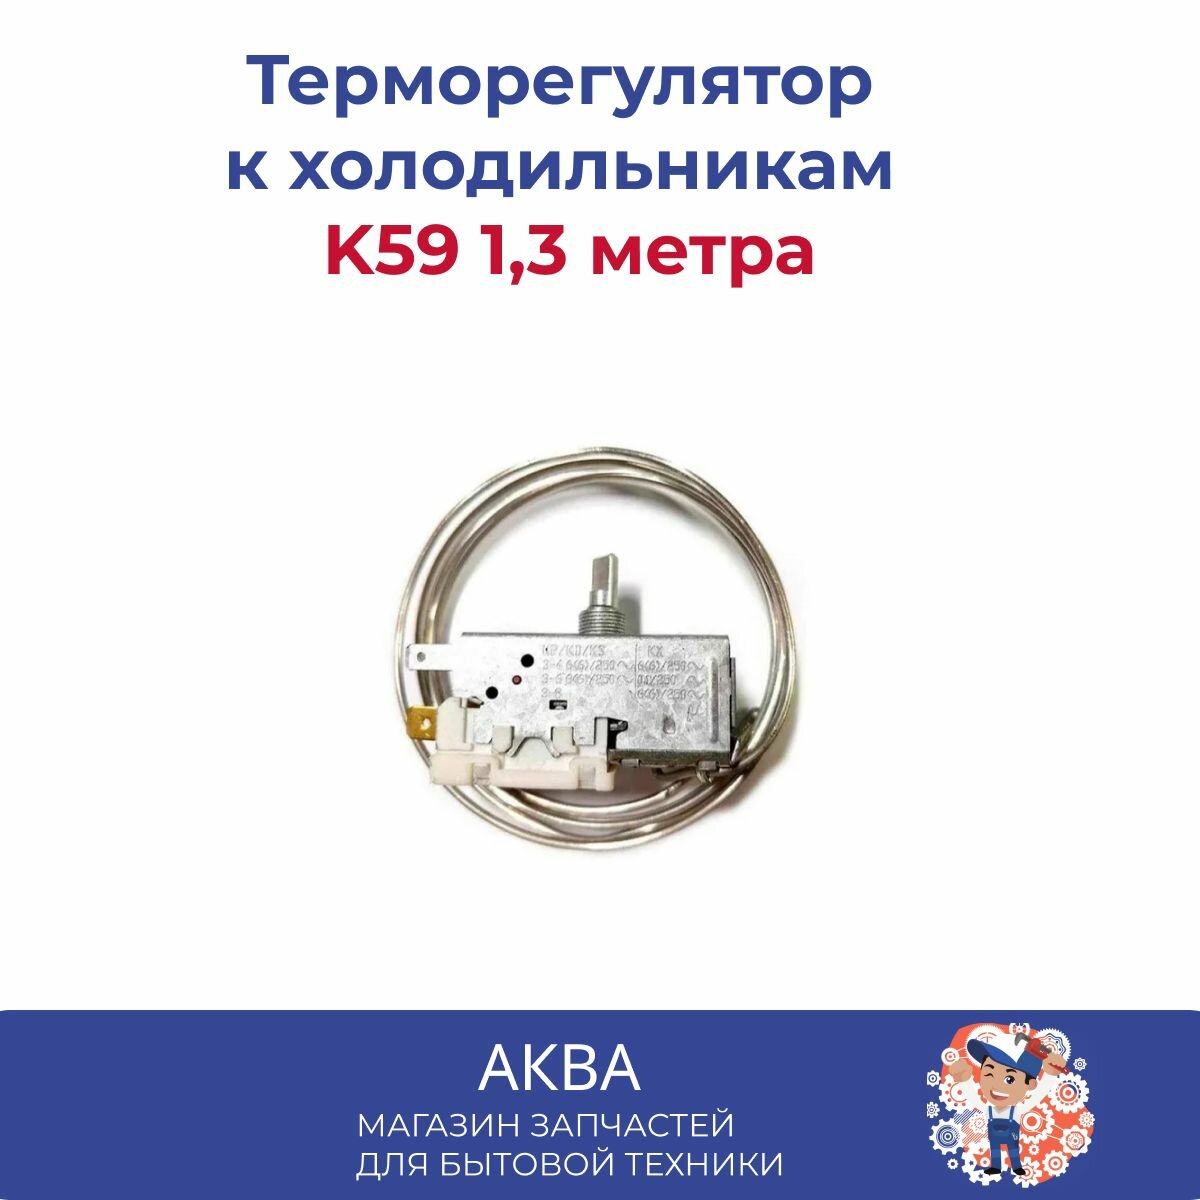 Терморегулятор к холодильникам K59 1,3 метра - фотография № 1